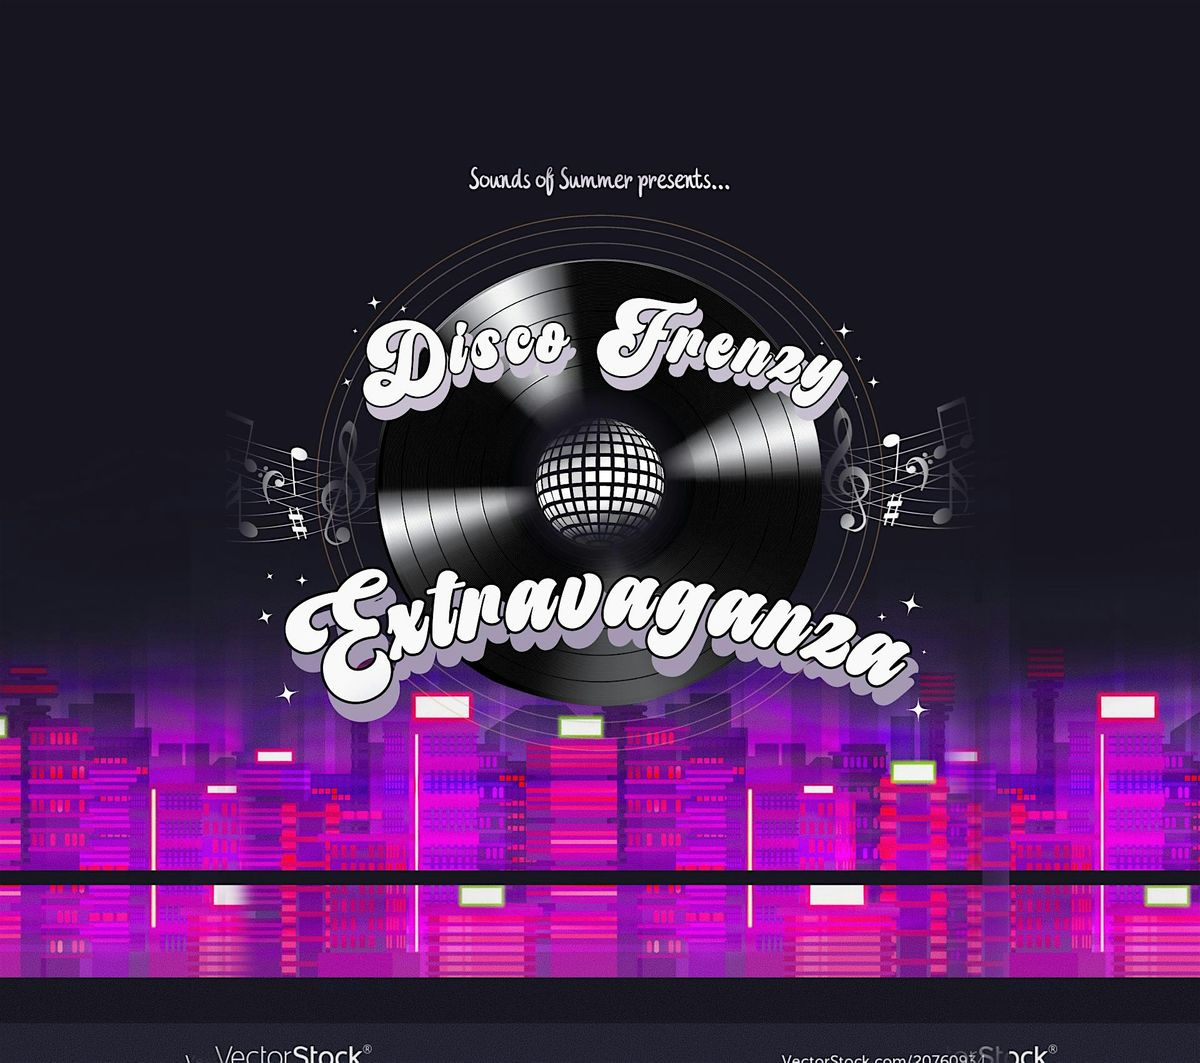 Disco Frenzy Extravaganza